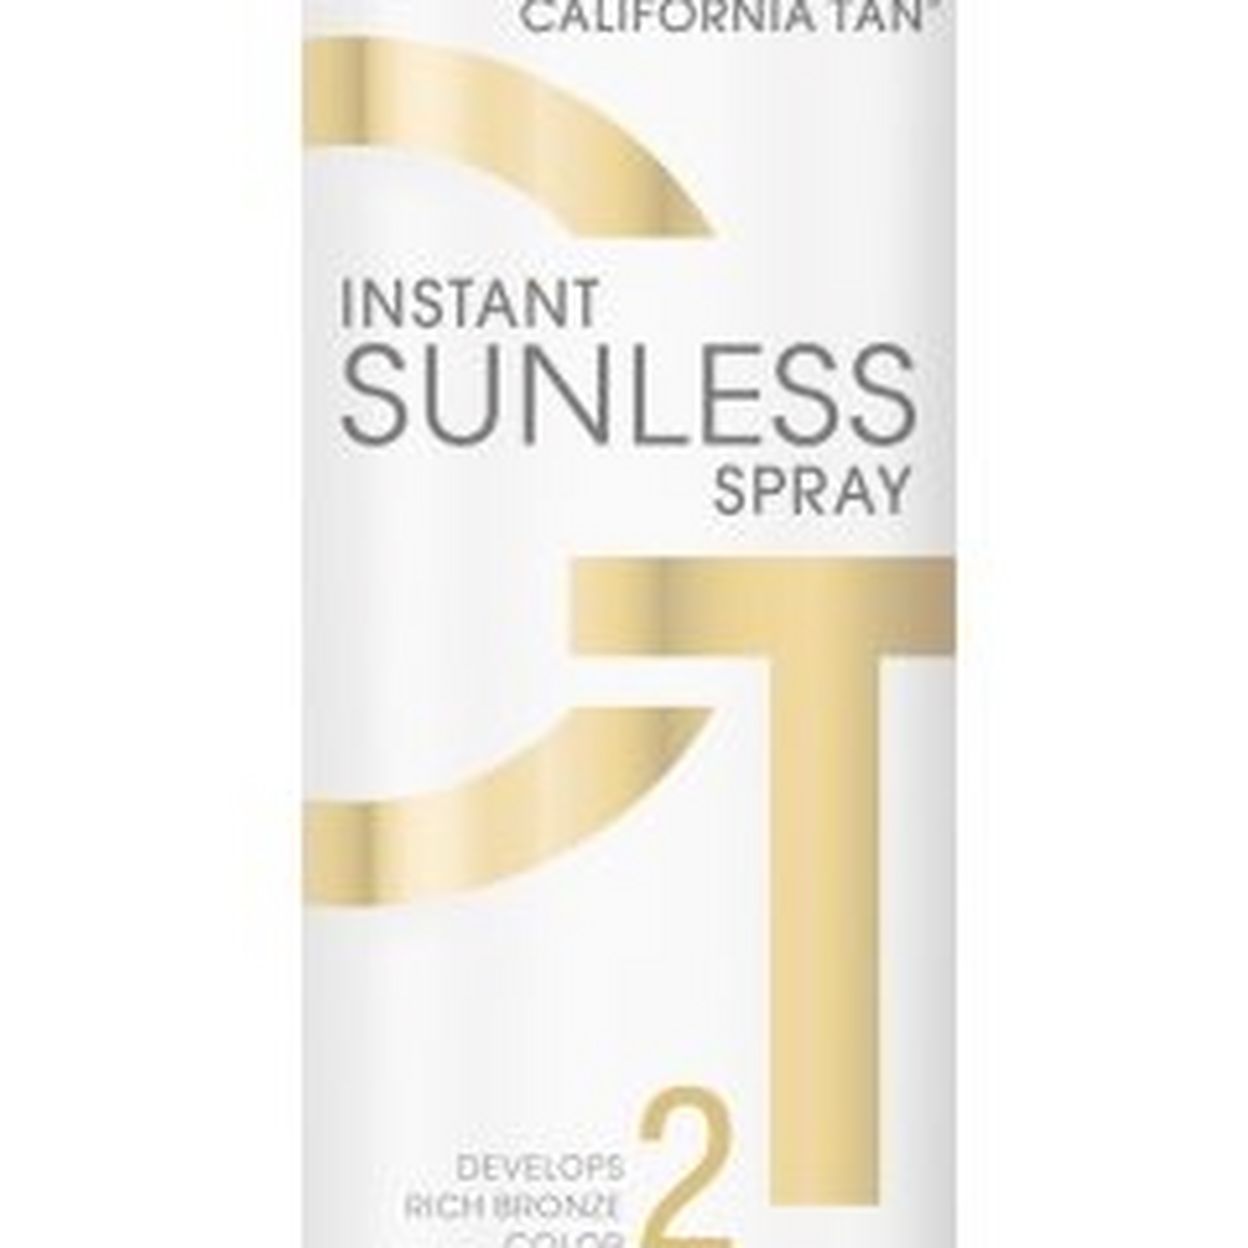 California Tan - Instant Sunless Spray | OpenSky